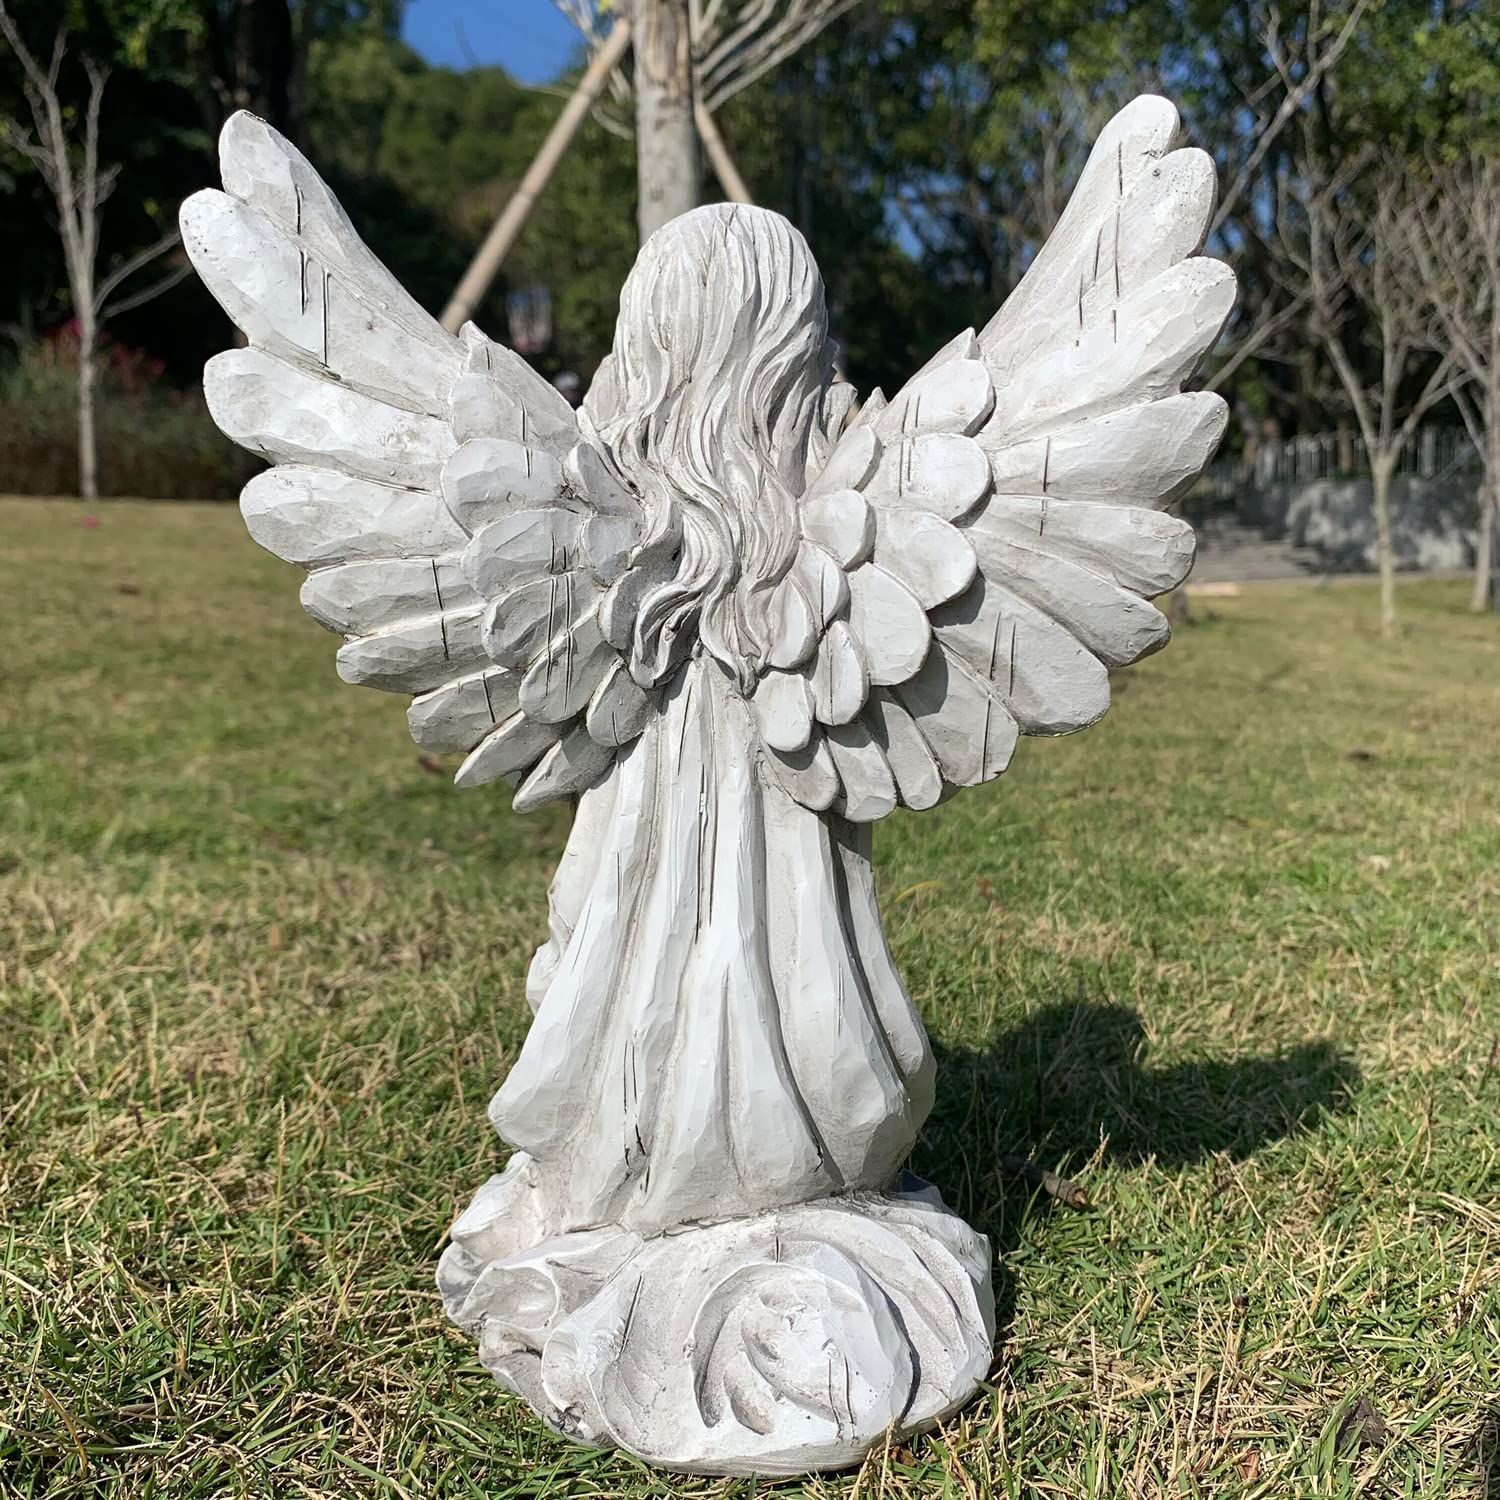 Handsider ガーデン像 天使 宗教的 妖精 彫刻 防水 装飾置物 アート